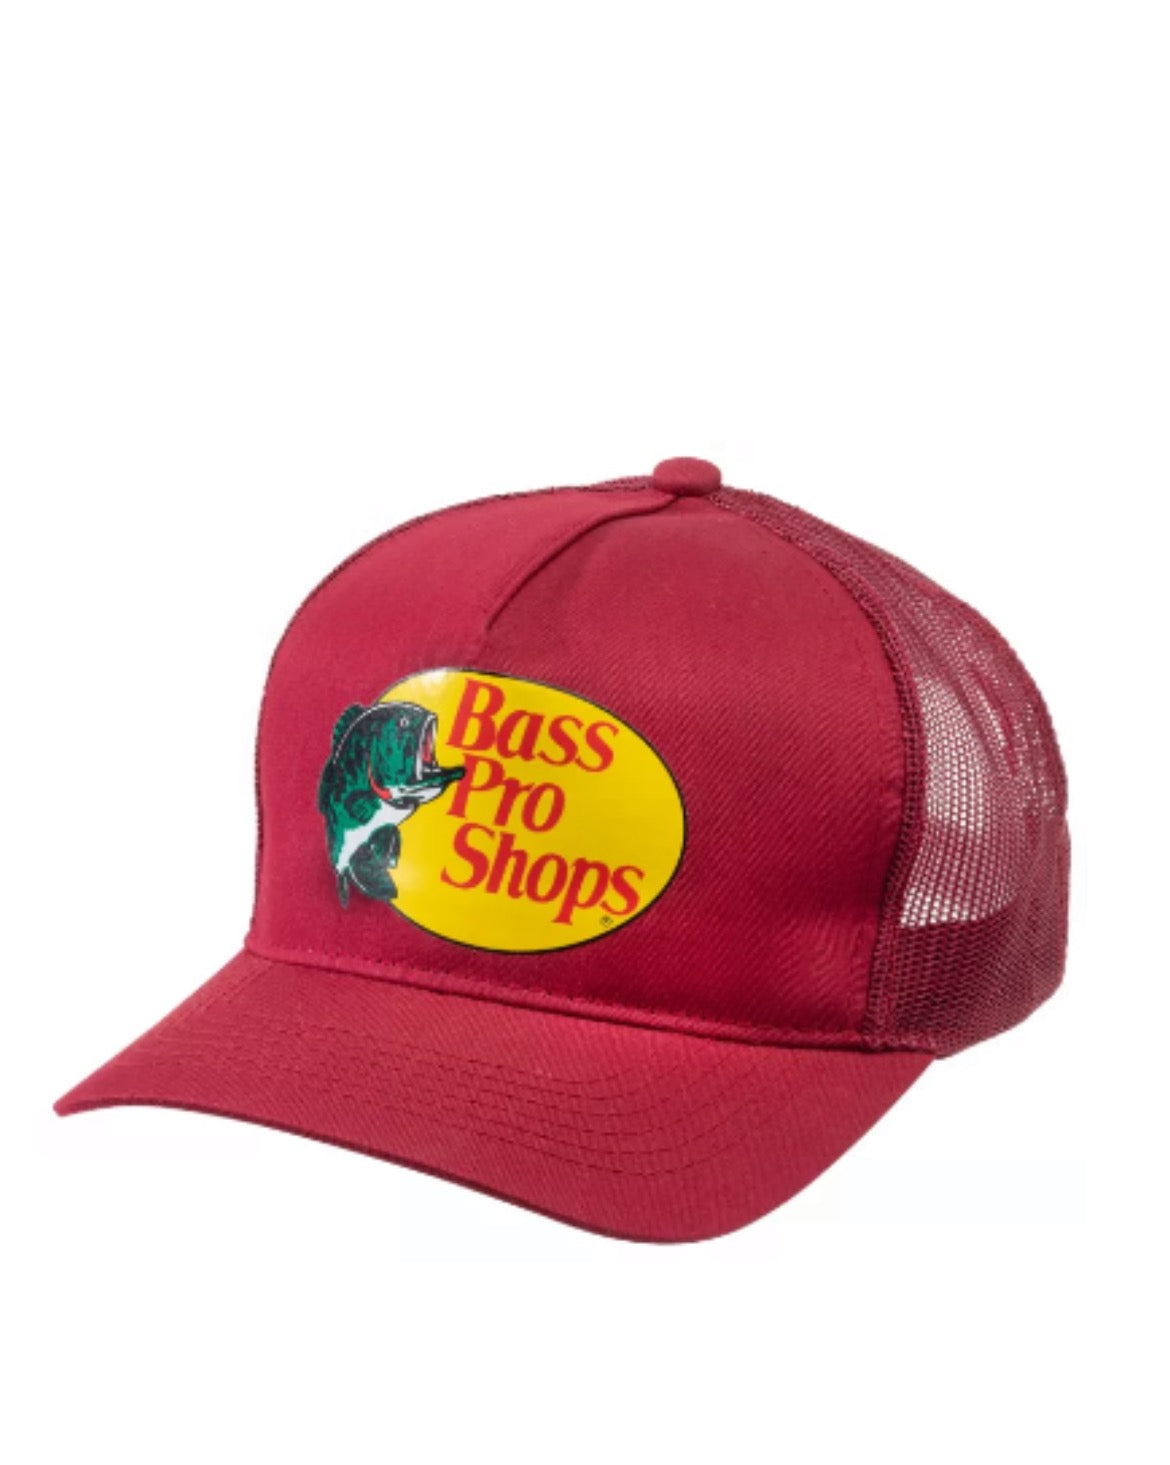 Bass Pro Shops Mesh Cap Scarlet